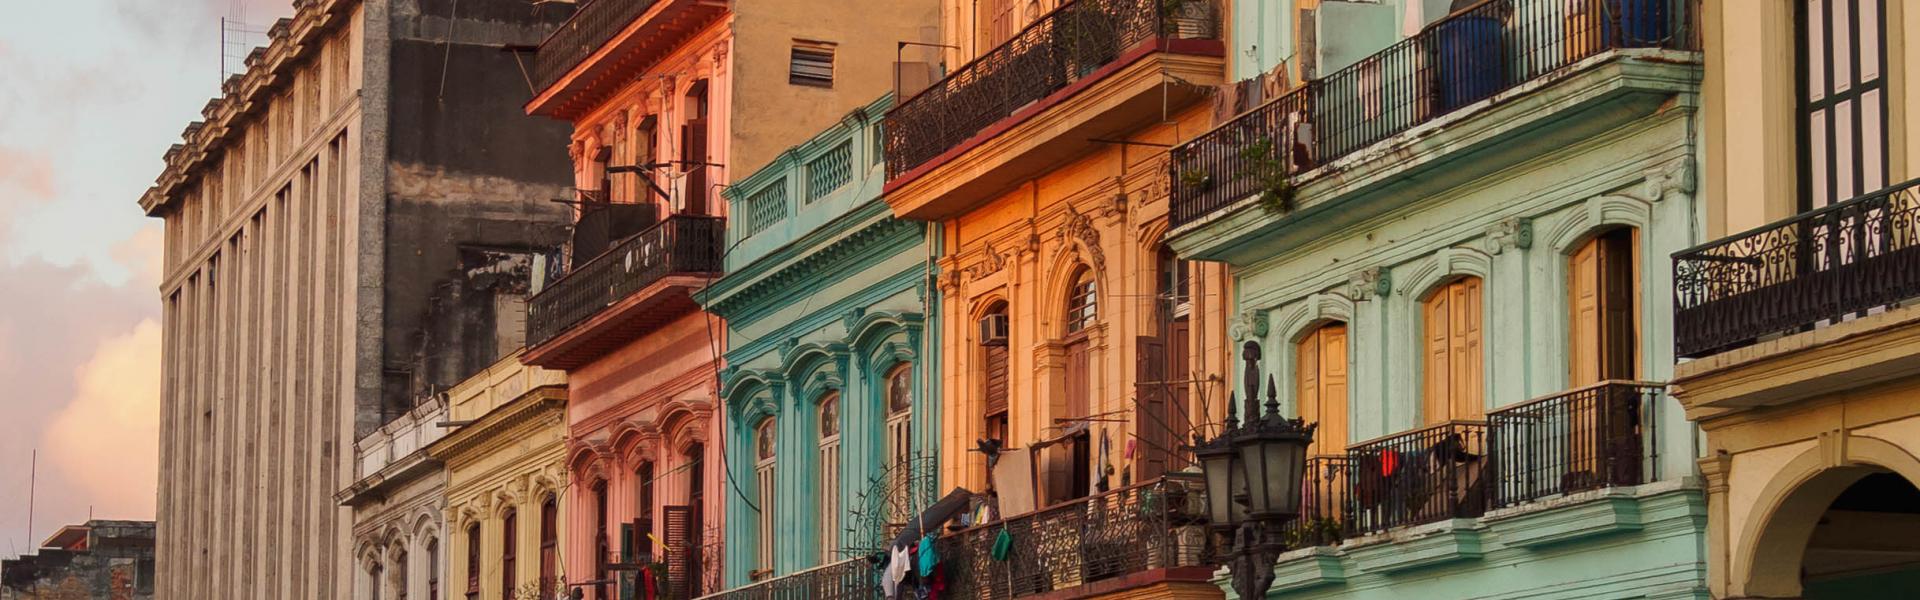 Case Vacanze e Appartamenti a Cuba in affitto - CaseVacanza.it